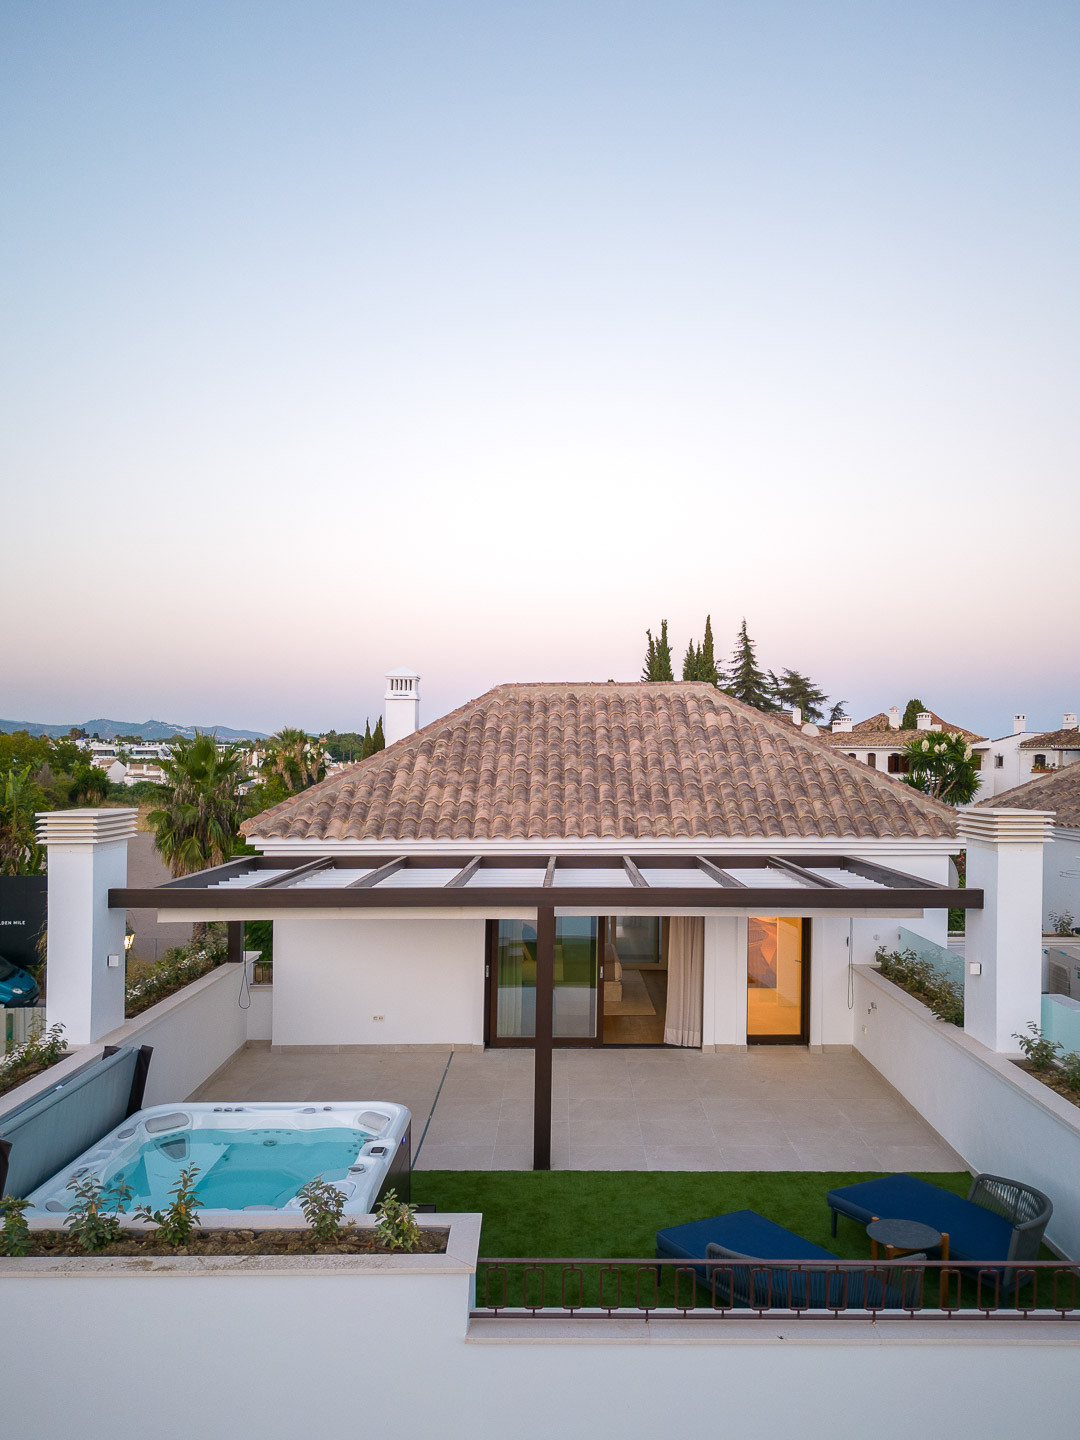 Lomas del Rey: Luxury 3 bedroom homes on the Golden Mile, Marbella.